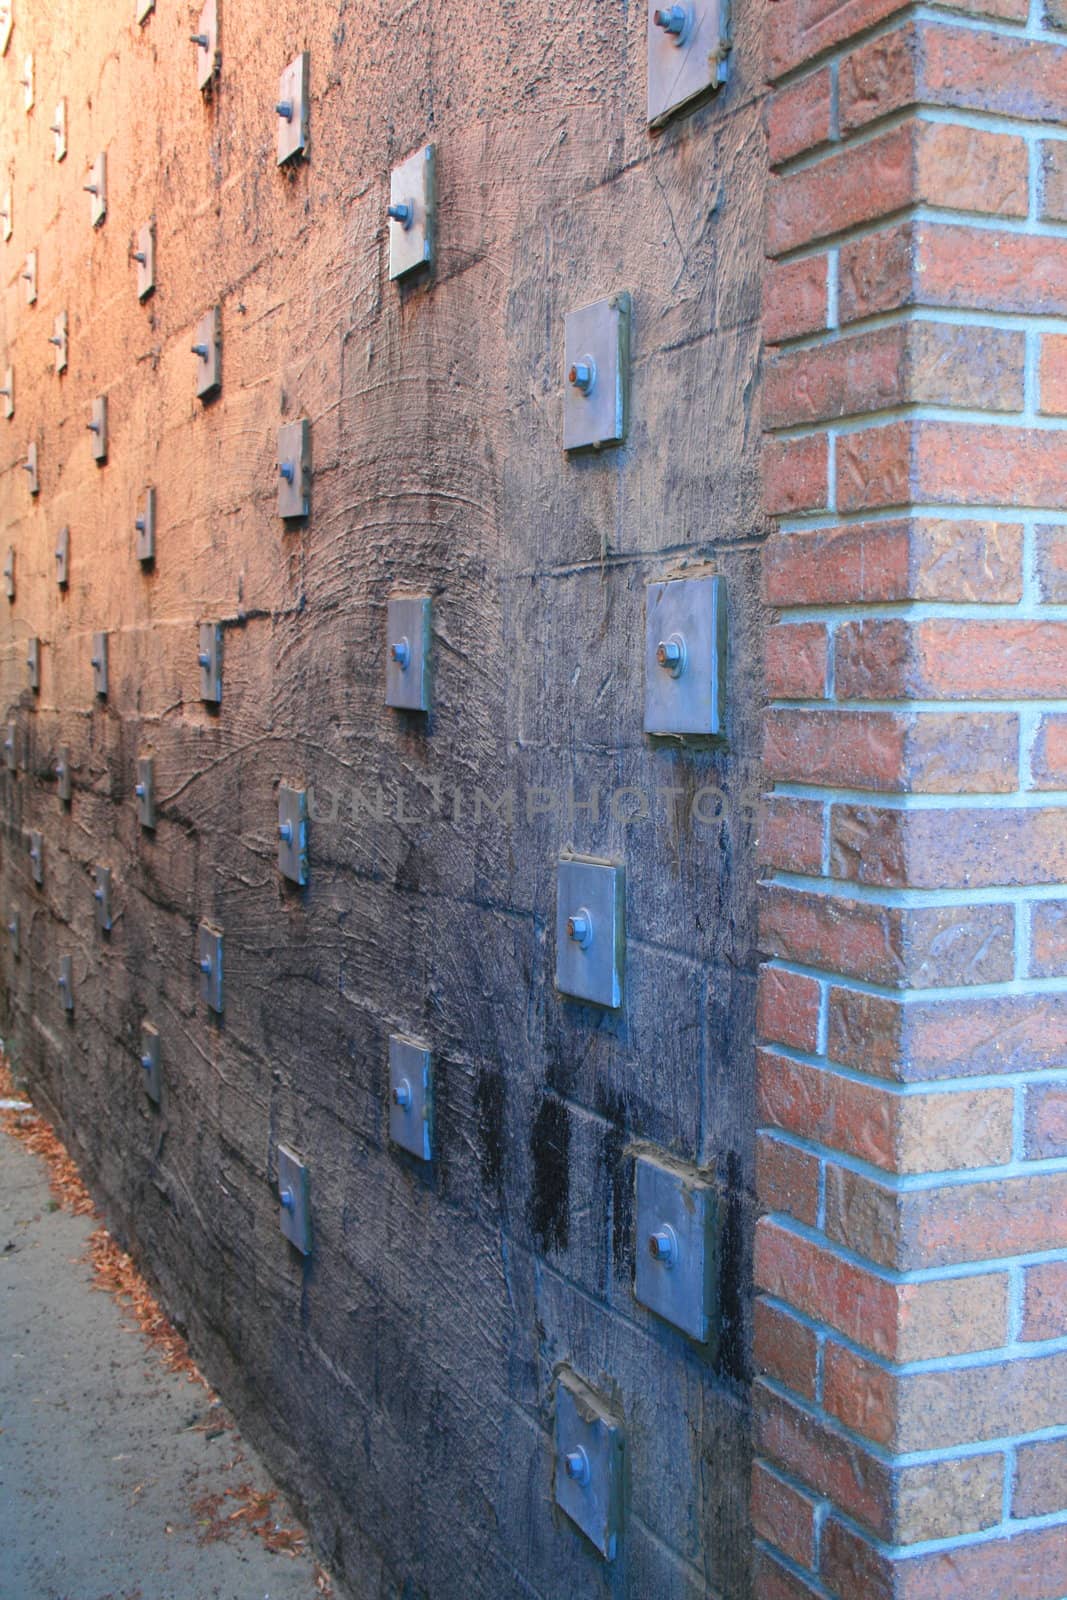 Unique Brickwall by MichaelFelix